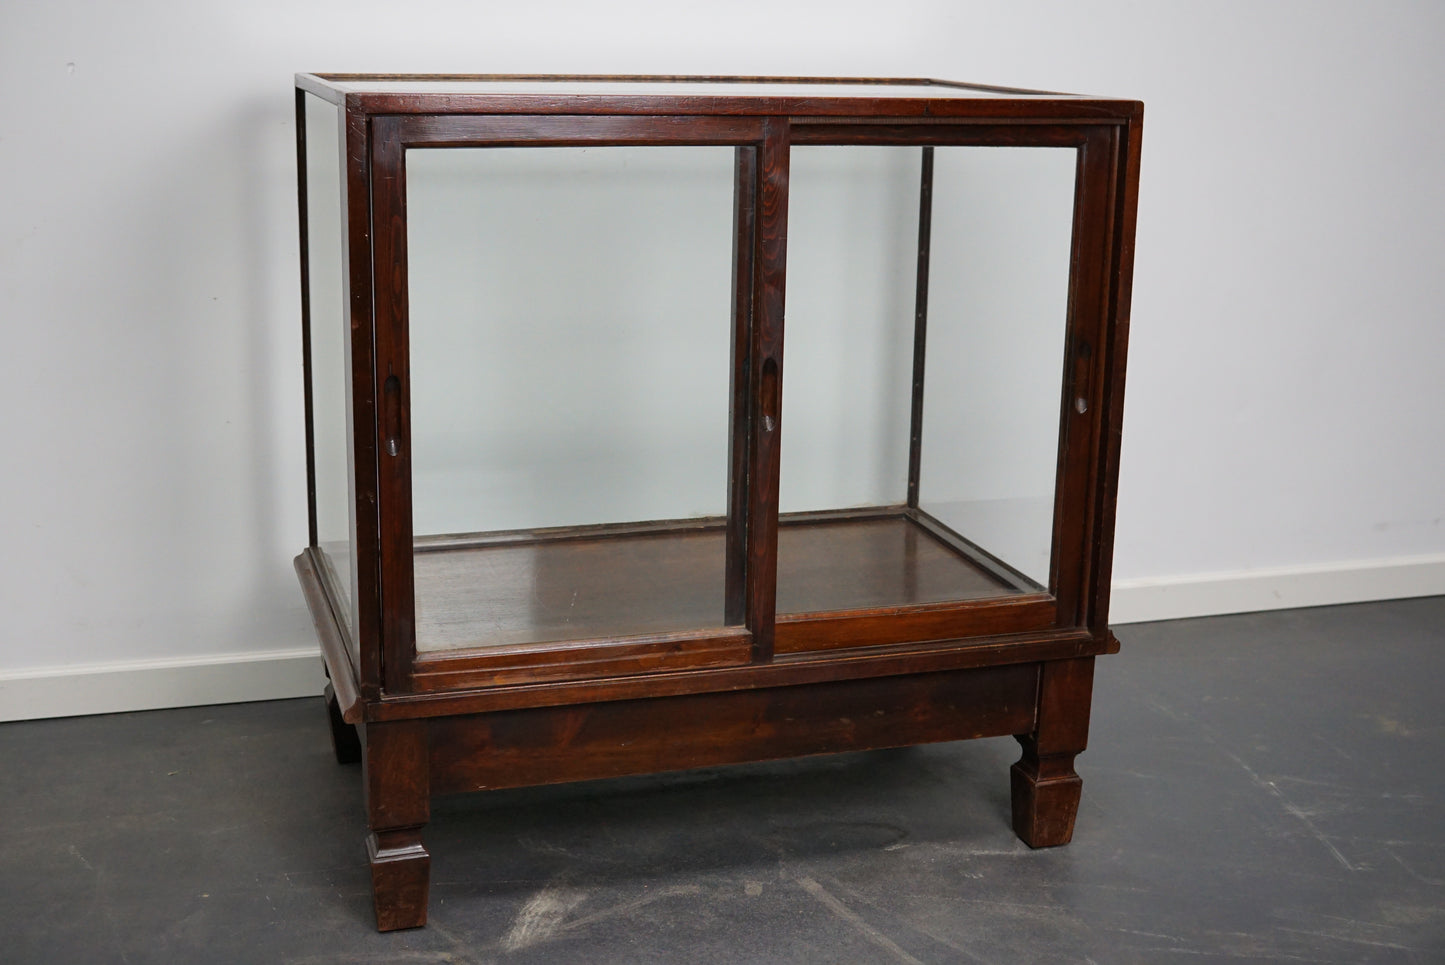 Mahogany Museum / Shop Display Cabinet or Vitrine, Early 20th Century